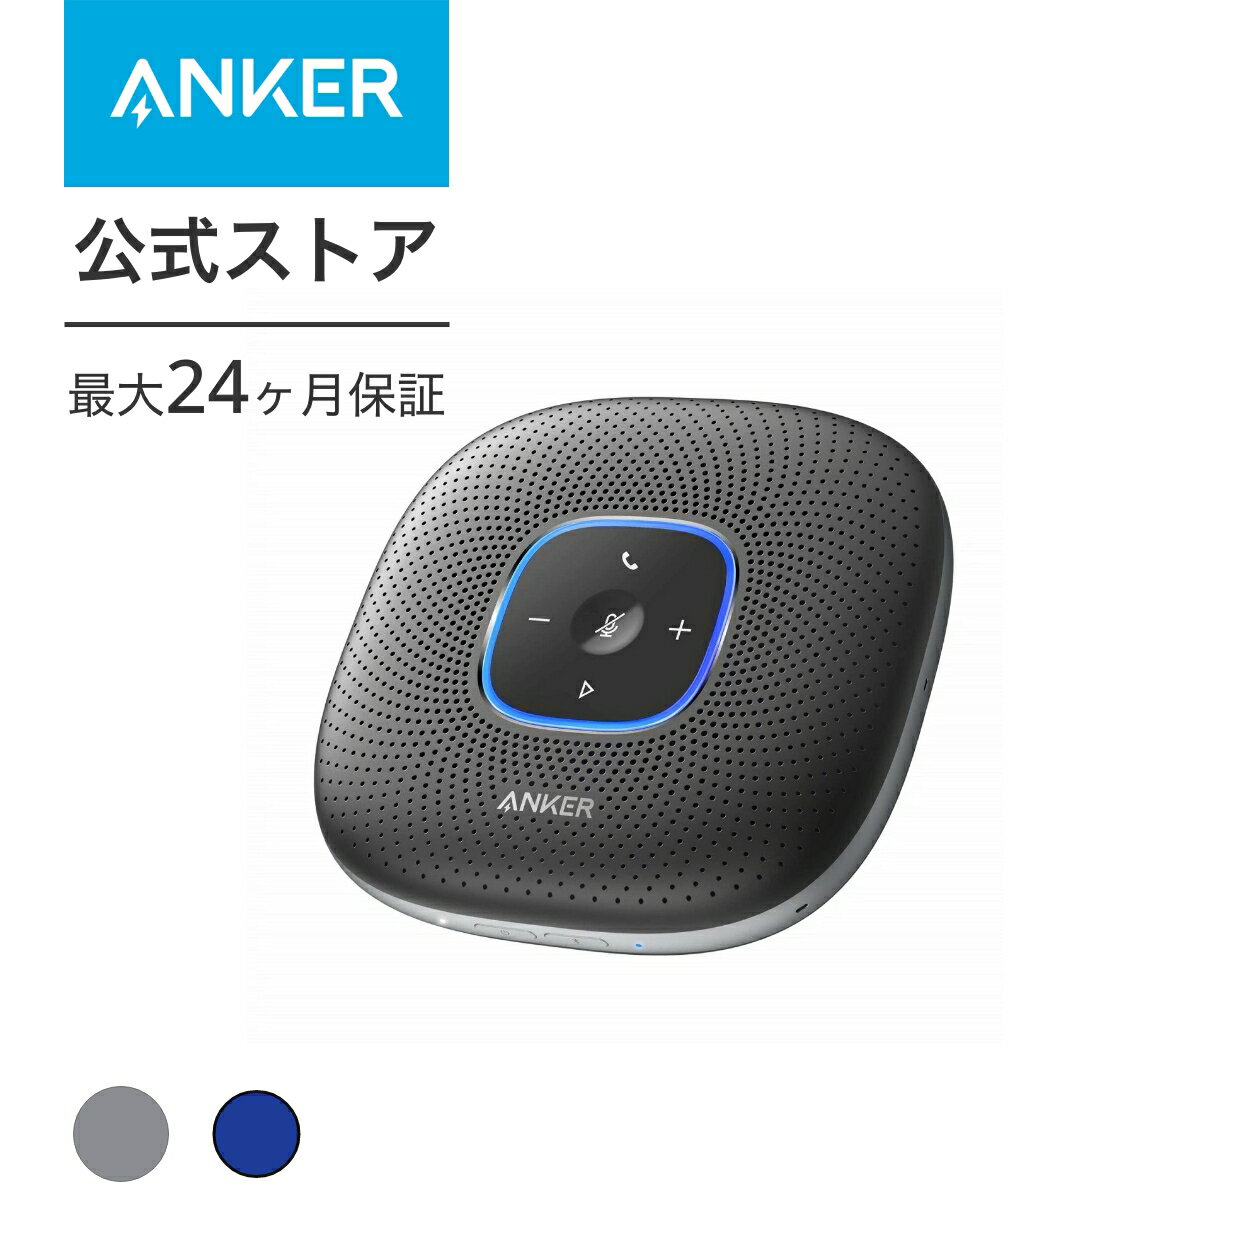 【25 OFFクーポン 5/16まで】Anker PowerConf (会議用 Bluetooth スピーカーフォン)【 全指向性マイク/エコーキャンセリング/ノイズキャンセリング/大容量バッテリー/Skype Zoom など対応 / 24時間連続使用 / USB-C接続/PowerIQ 対応】